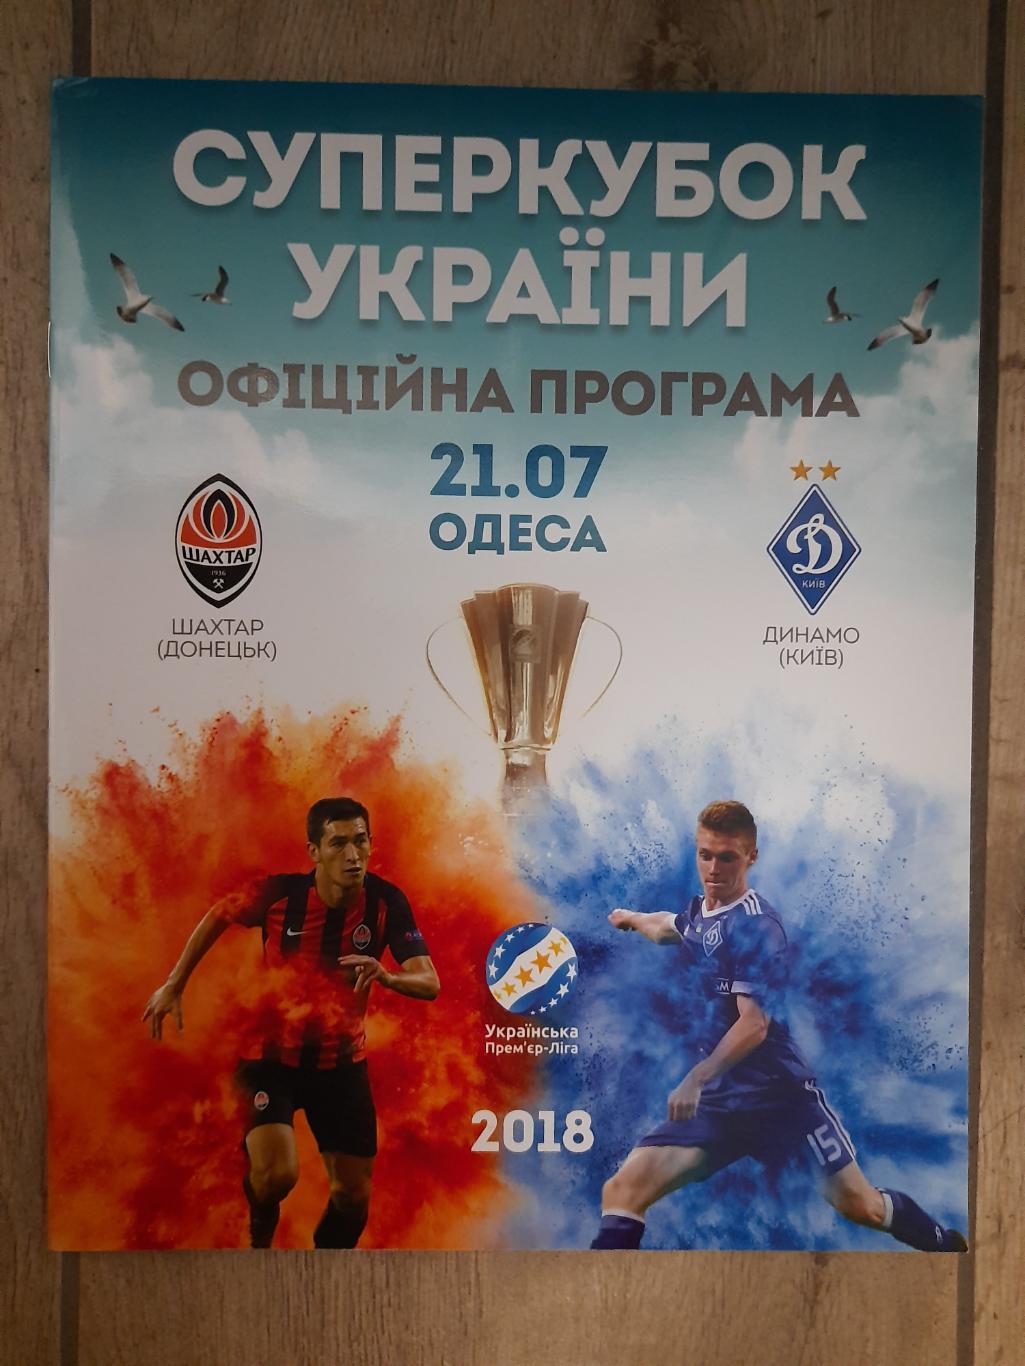 Шахтер Донецк - Динамо Киев 21.07.2018, Суперкубок.